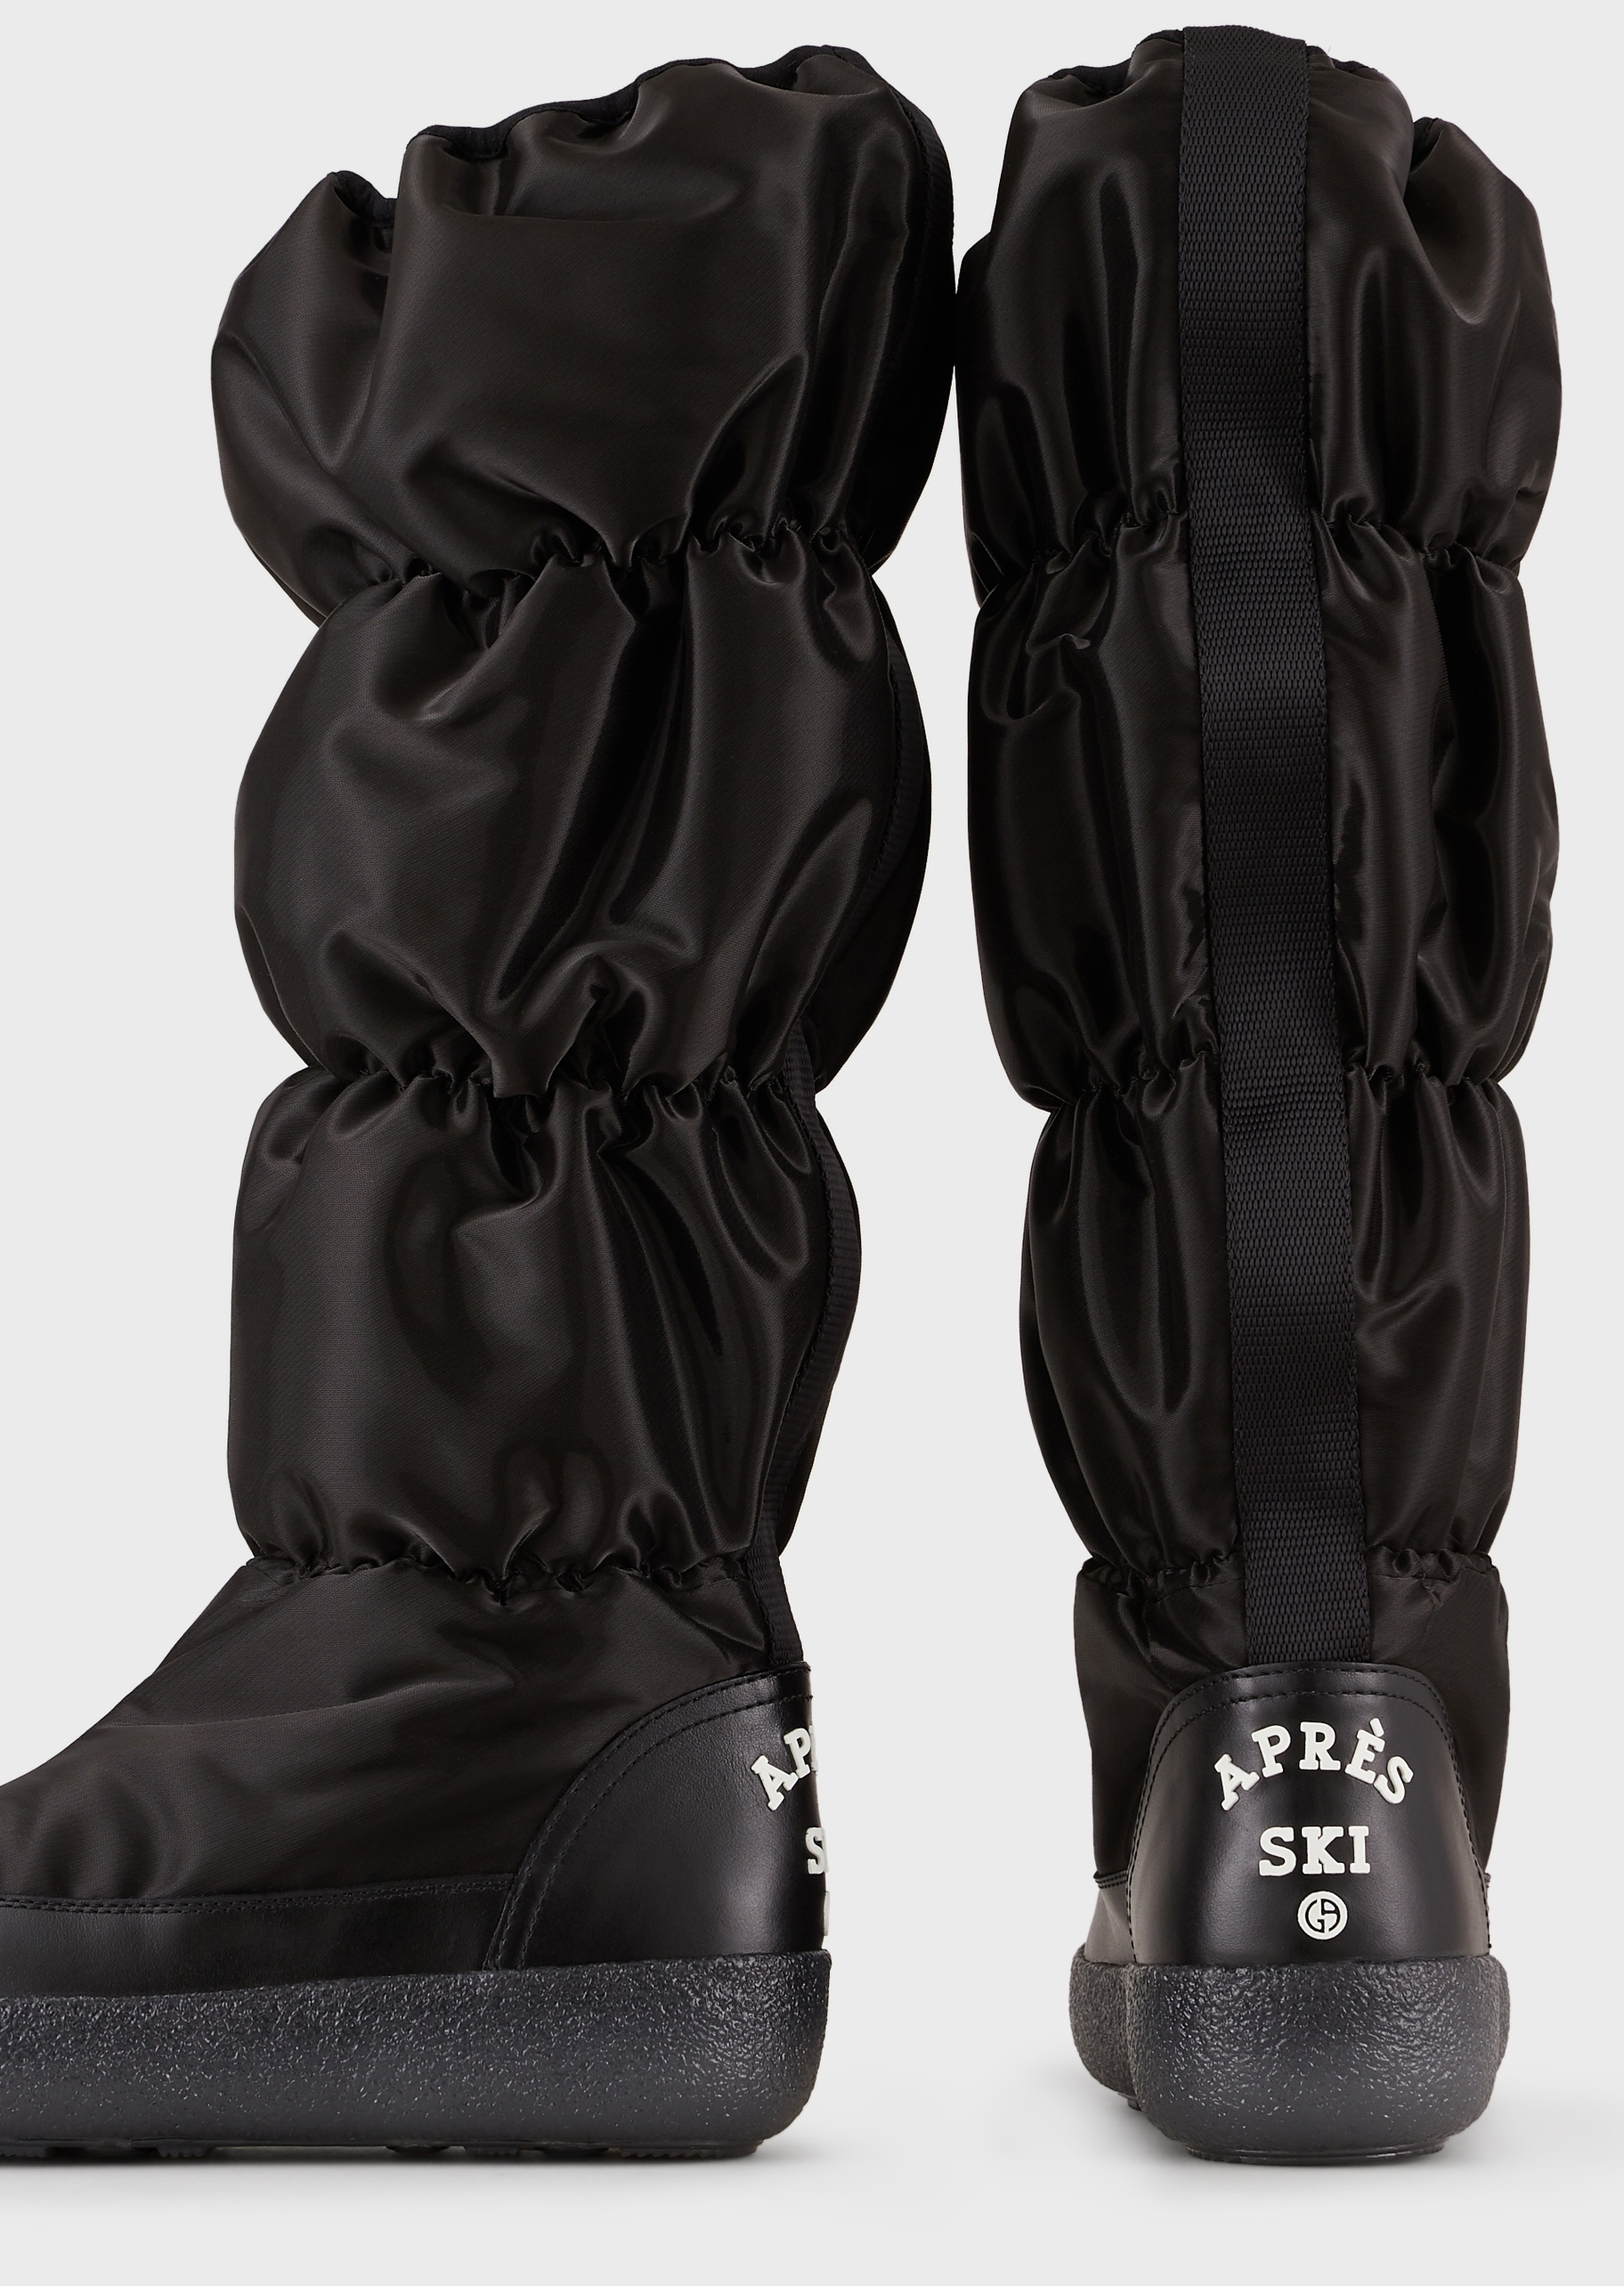 Giorgio Armani Neve系列高筒靴子